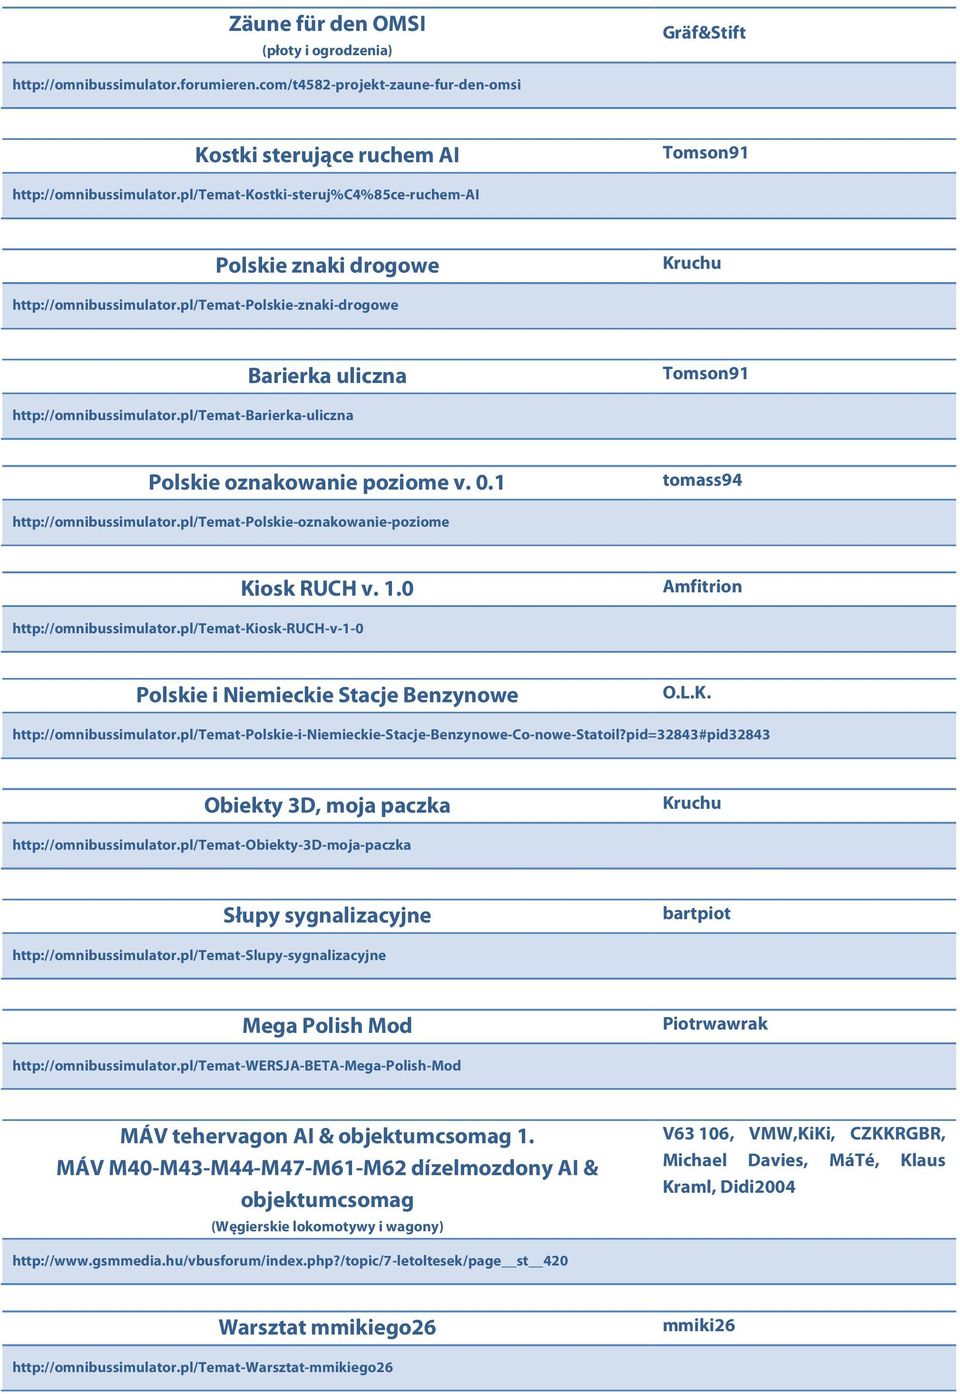 pl/temat-barierka-uliczna Polskie oznakowanie poziome v. 0.1 tomass94 http://omnibussimulator.pl/temat-polskie-oznakowanie-poziome Kiosk RUCH v. 1.0 Amfitrion http://omnibussimulator.